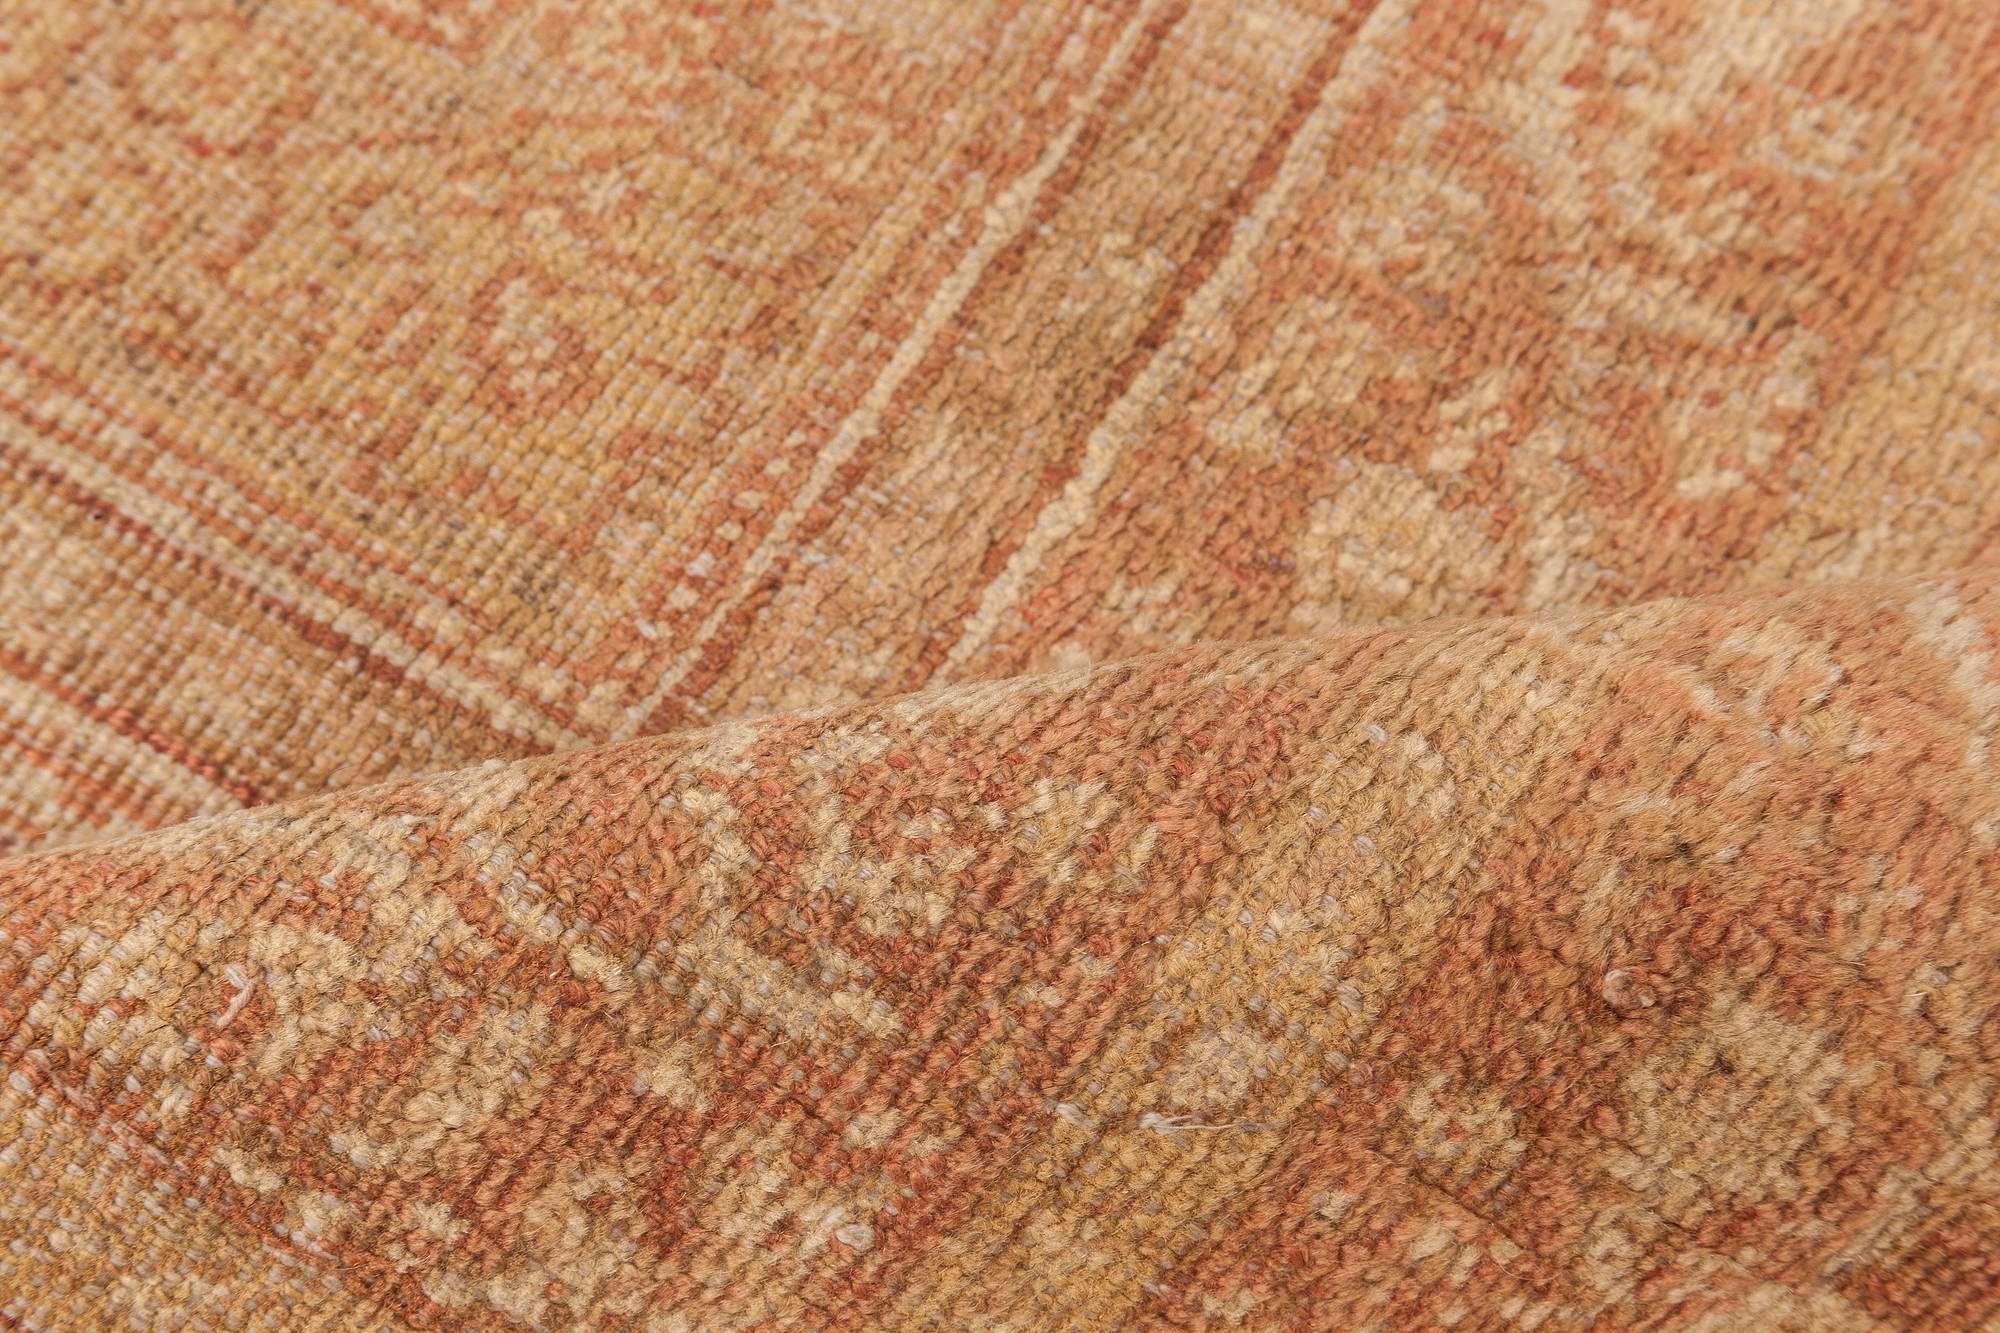 Antique Indian Amritsar brown handmade wool rug.
Size: 13'4